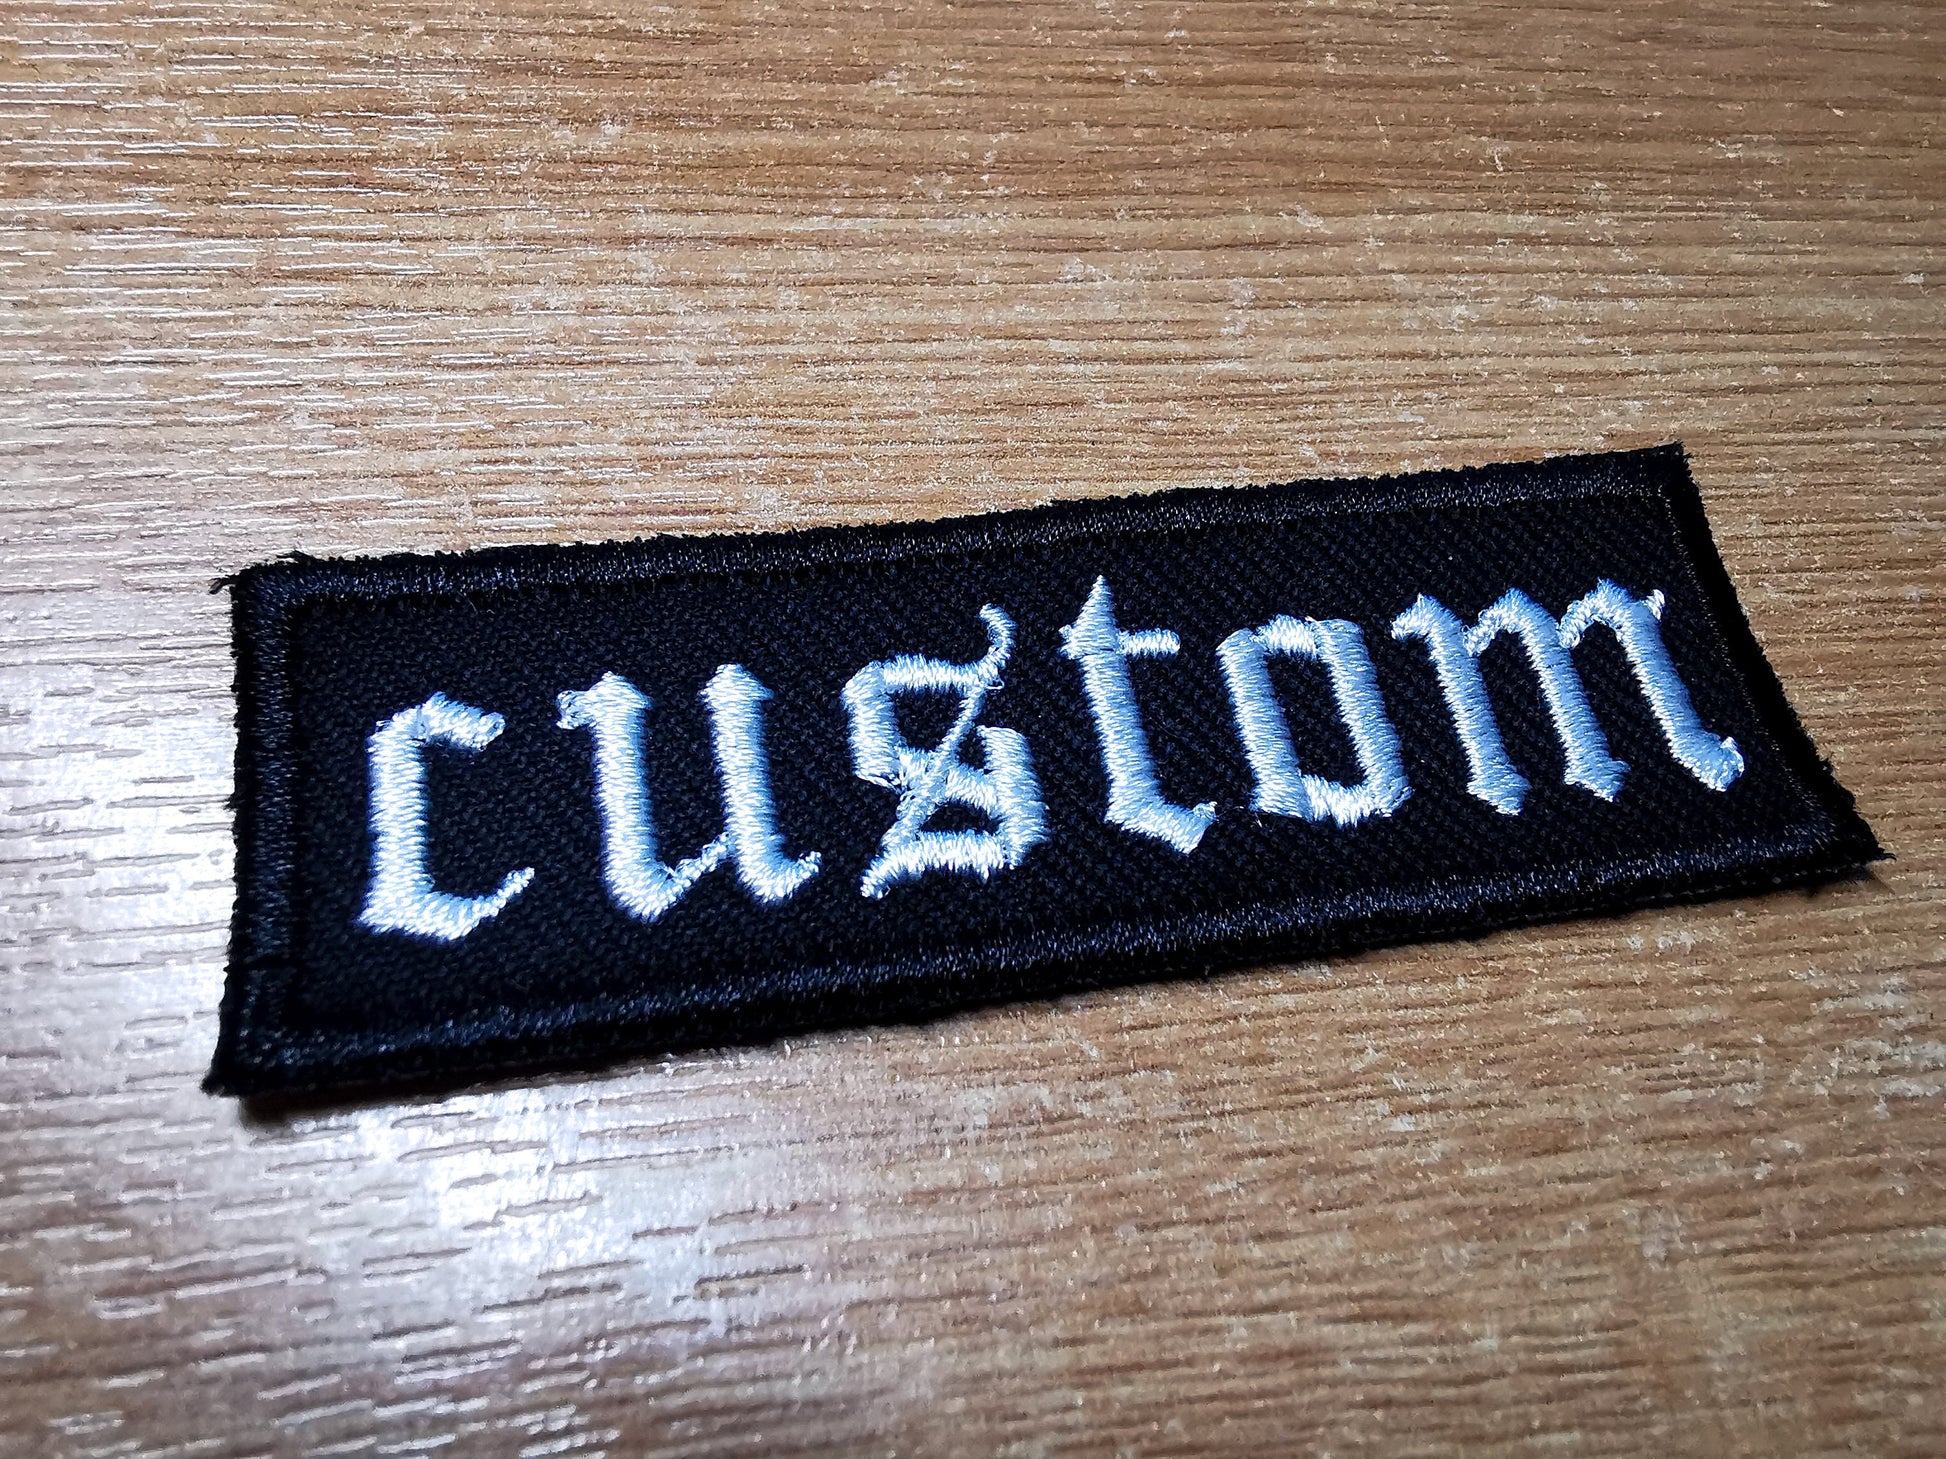 Custom Embroidered Patch Old English Black Metal Punk LA Tattoo